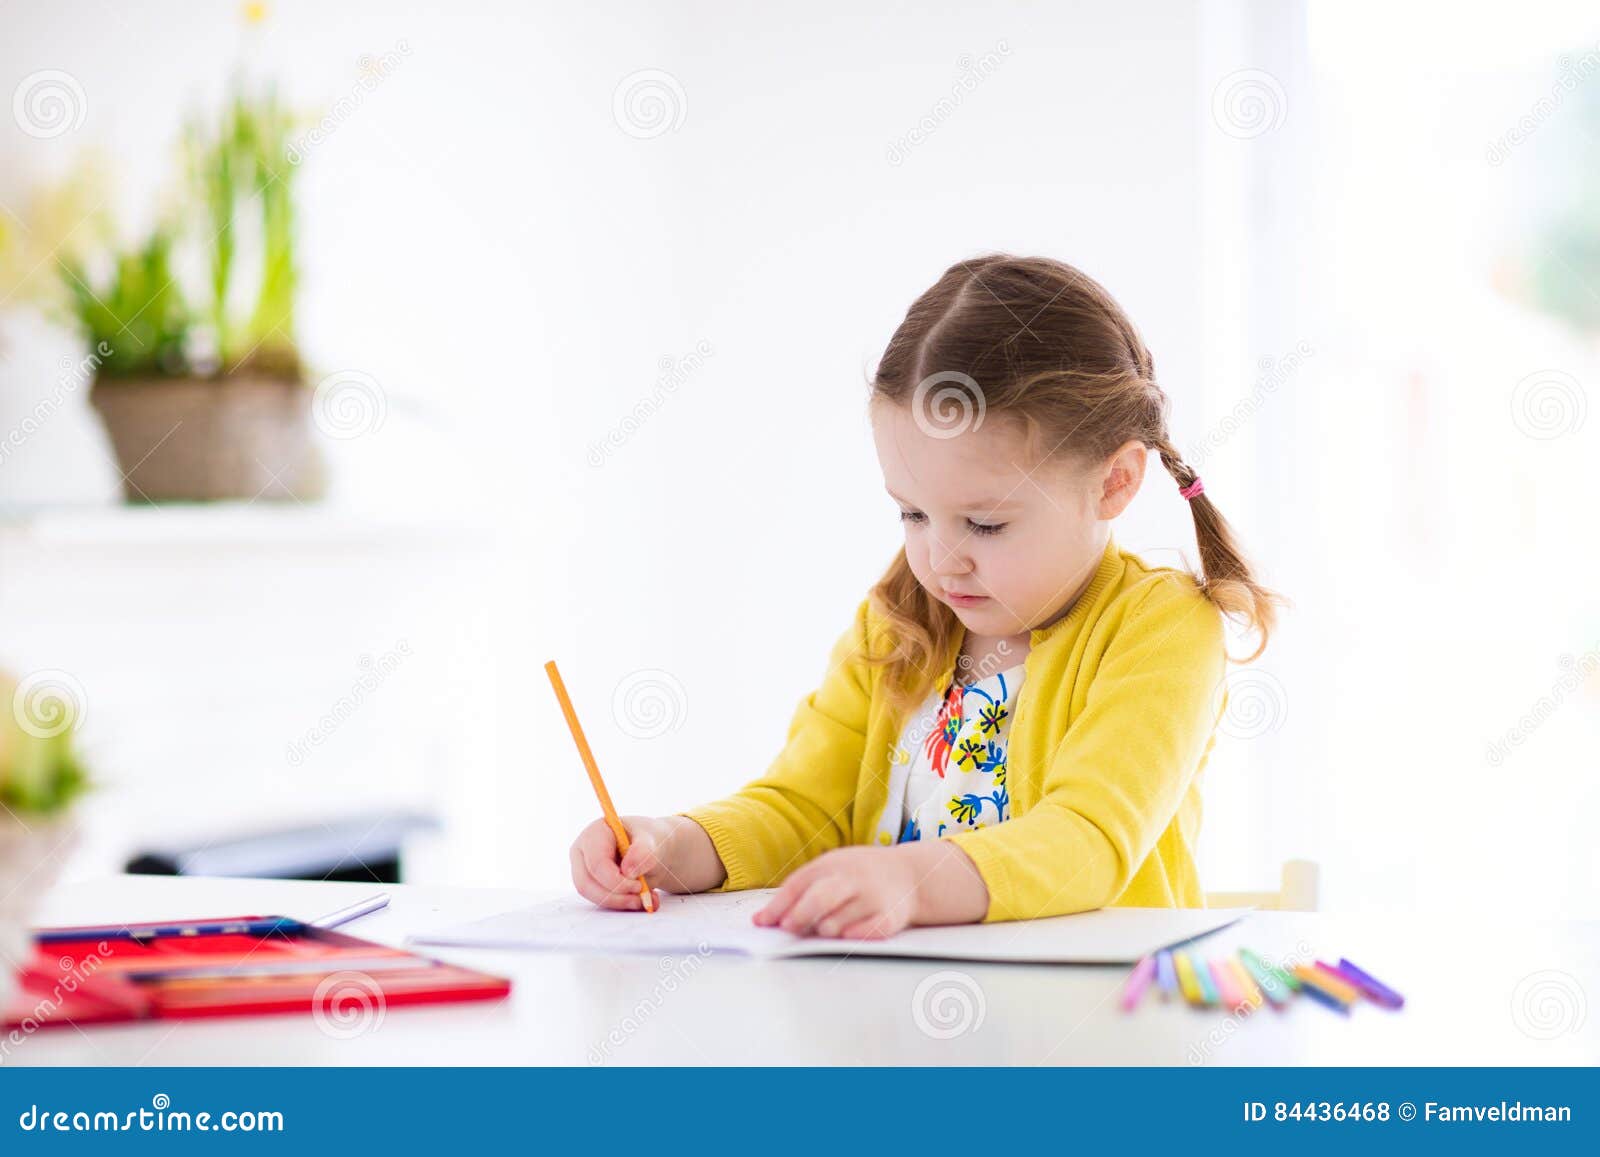 kids read, write and paint. child doing homework.